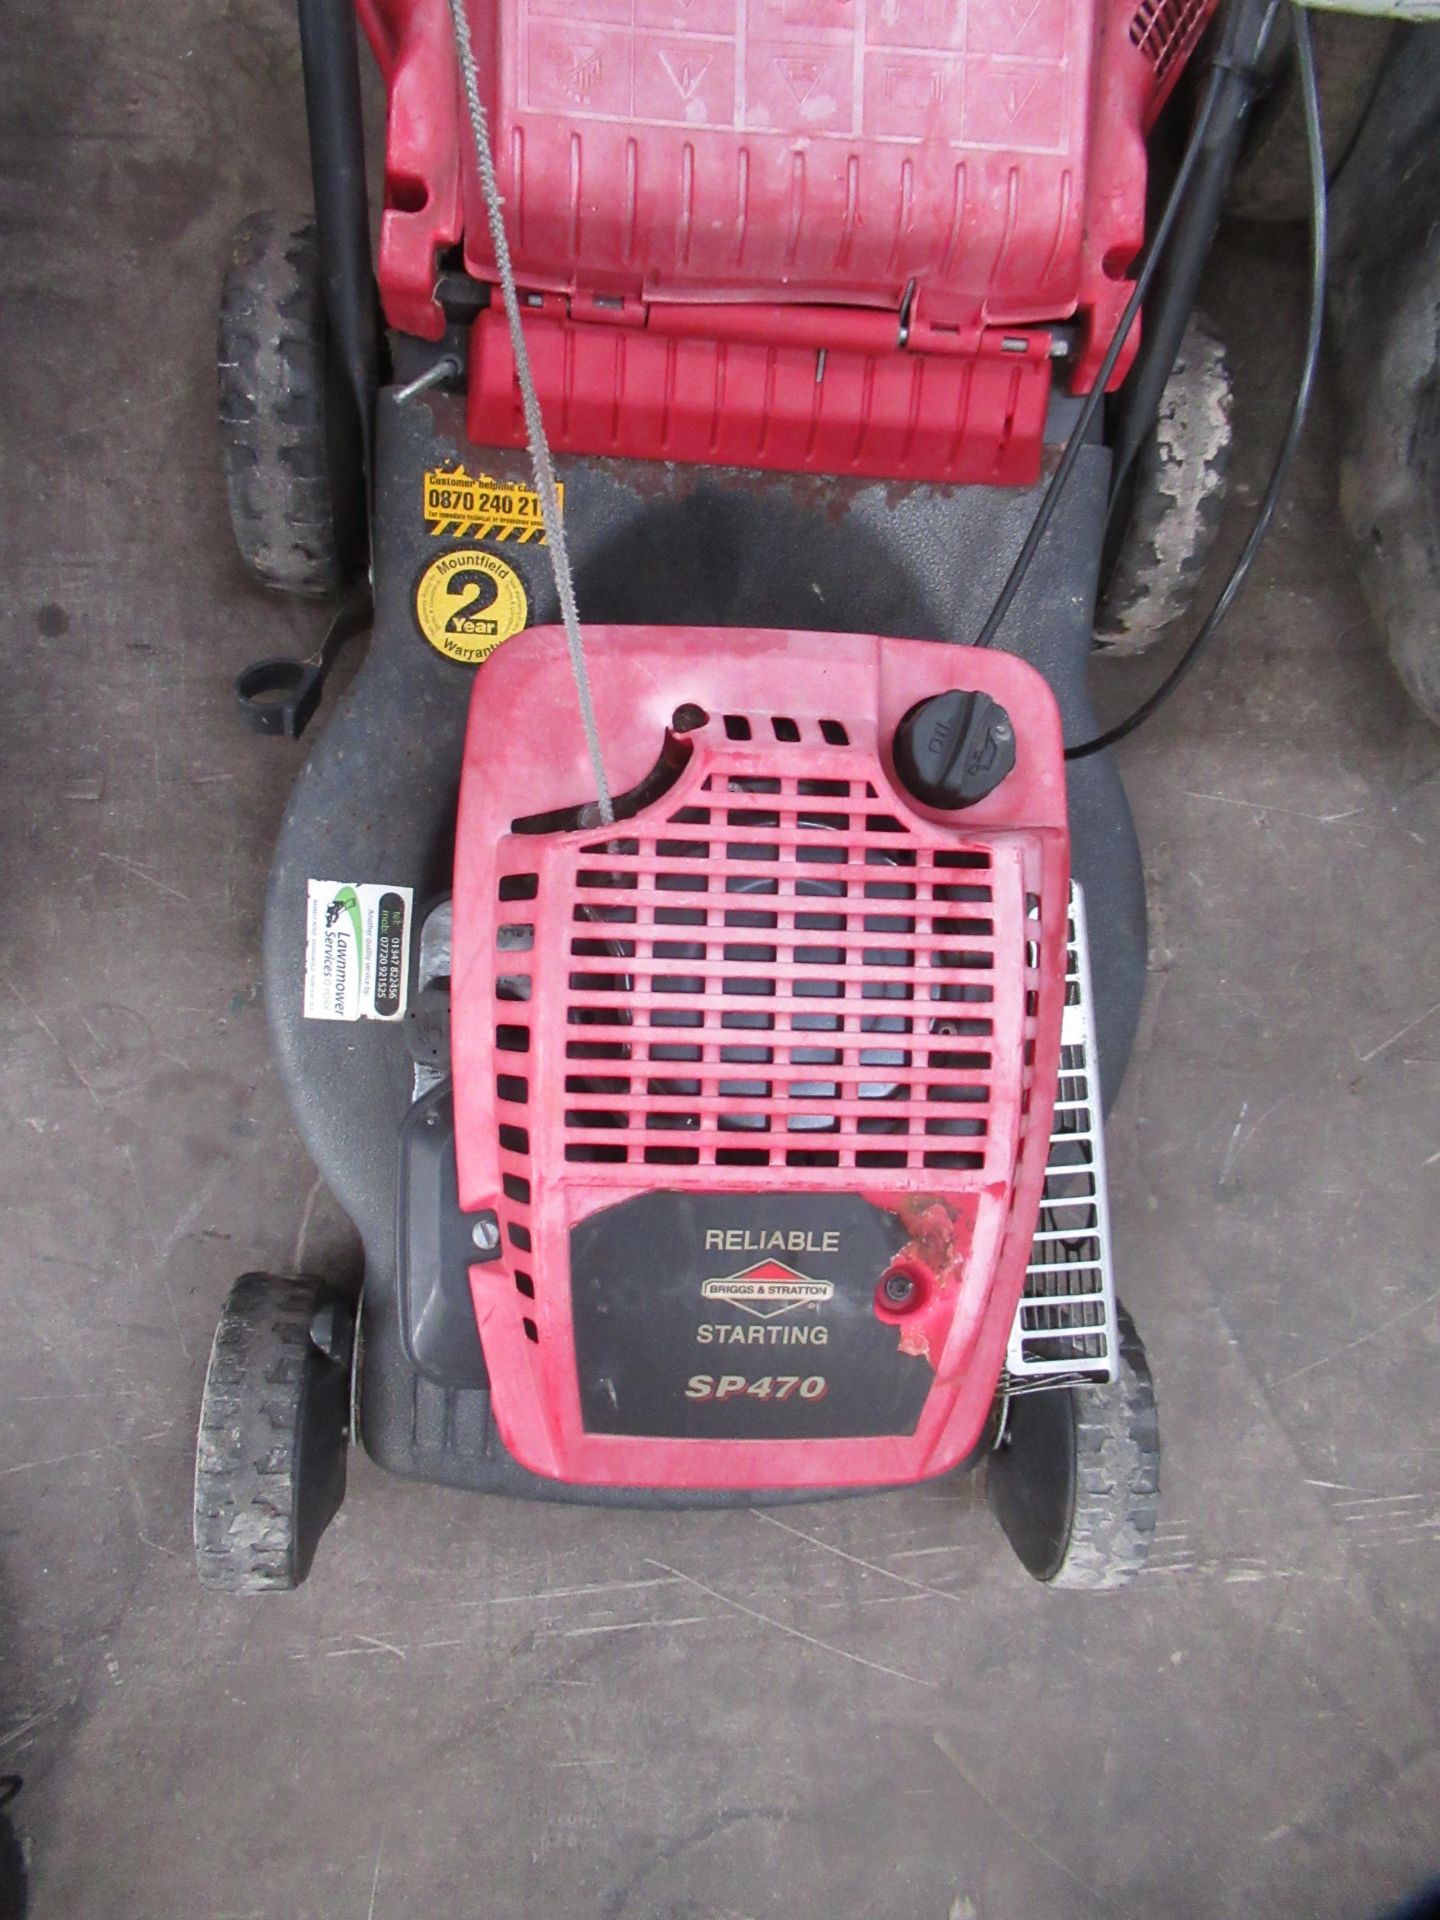 17" Petrol Powered Lawnmower - spares/repairs - Image 2 of 3